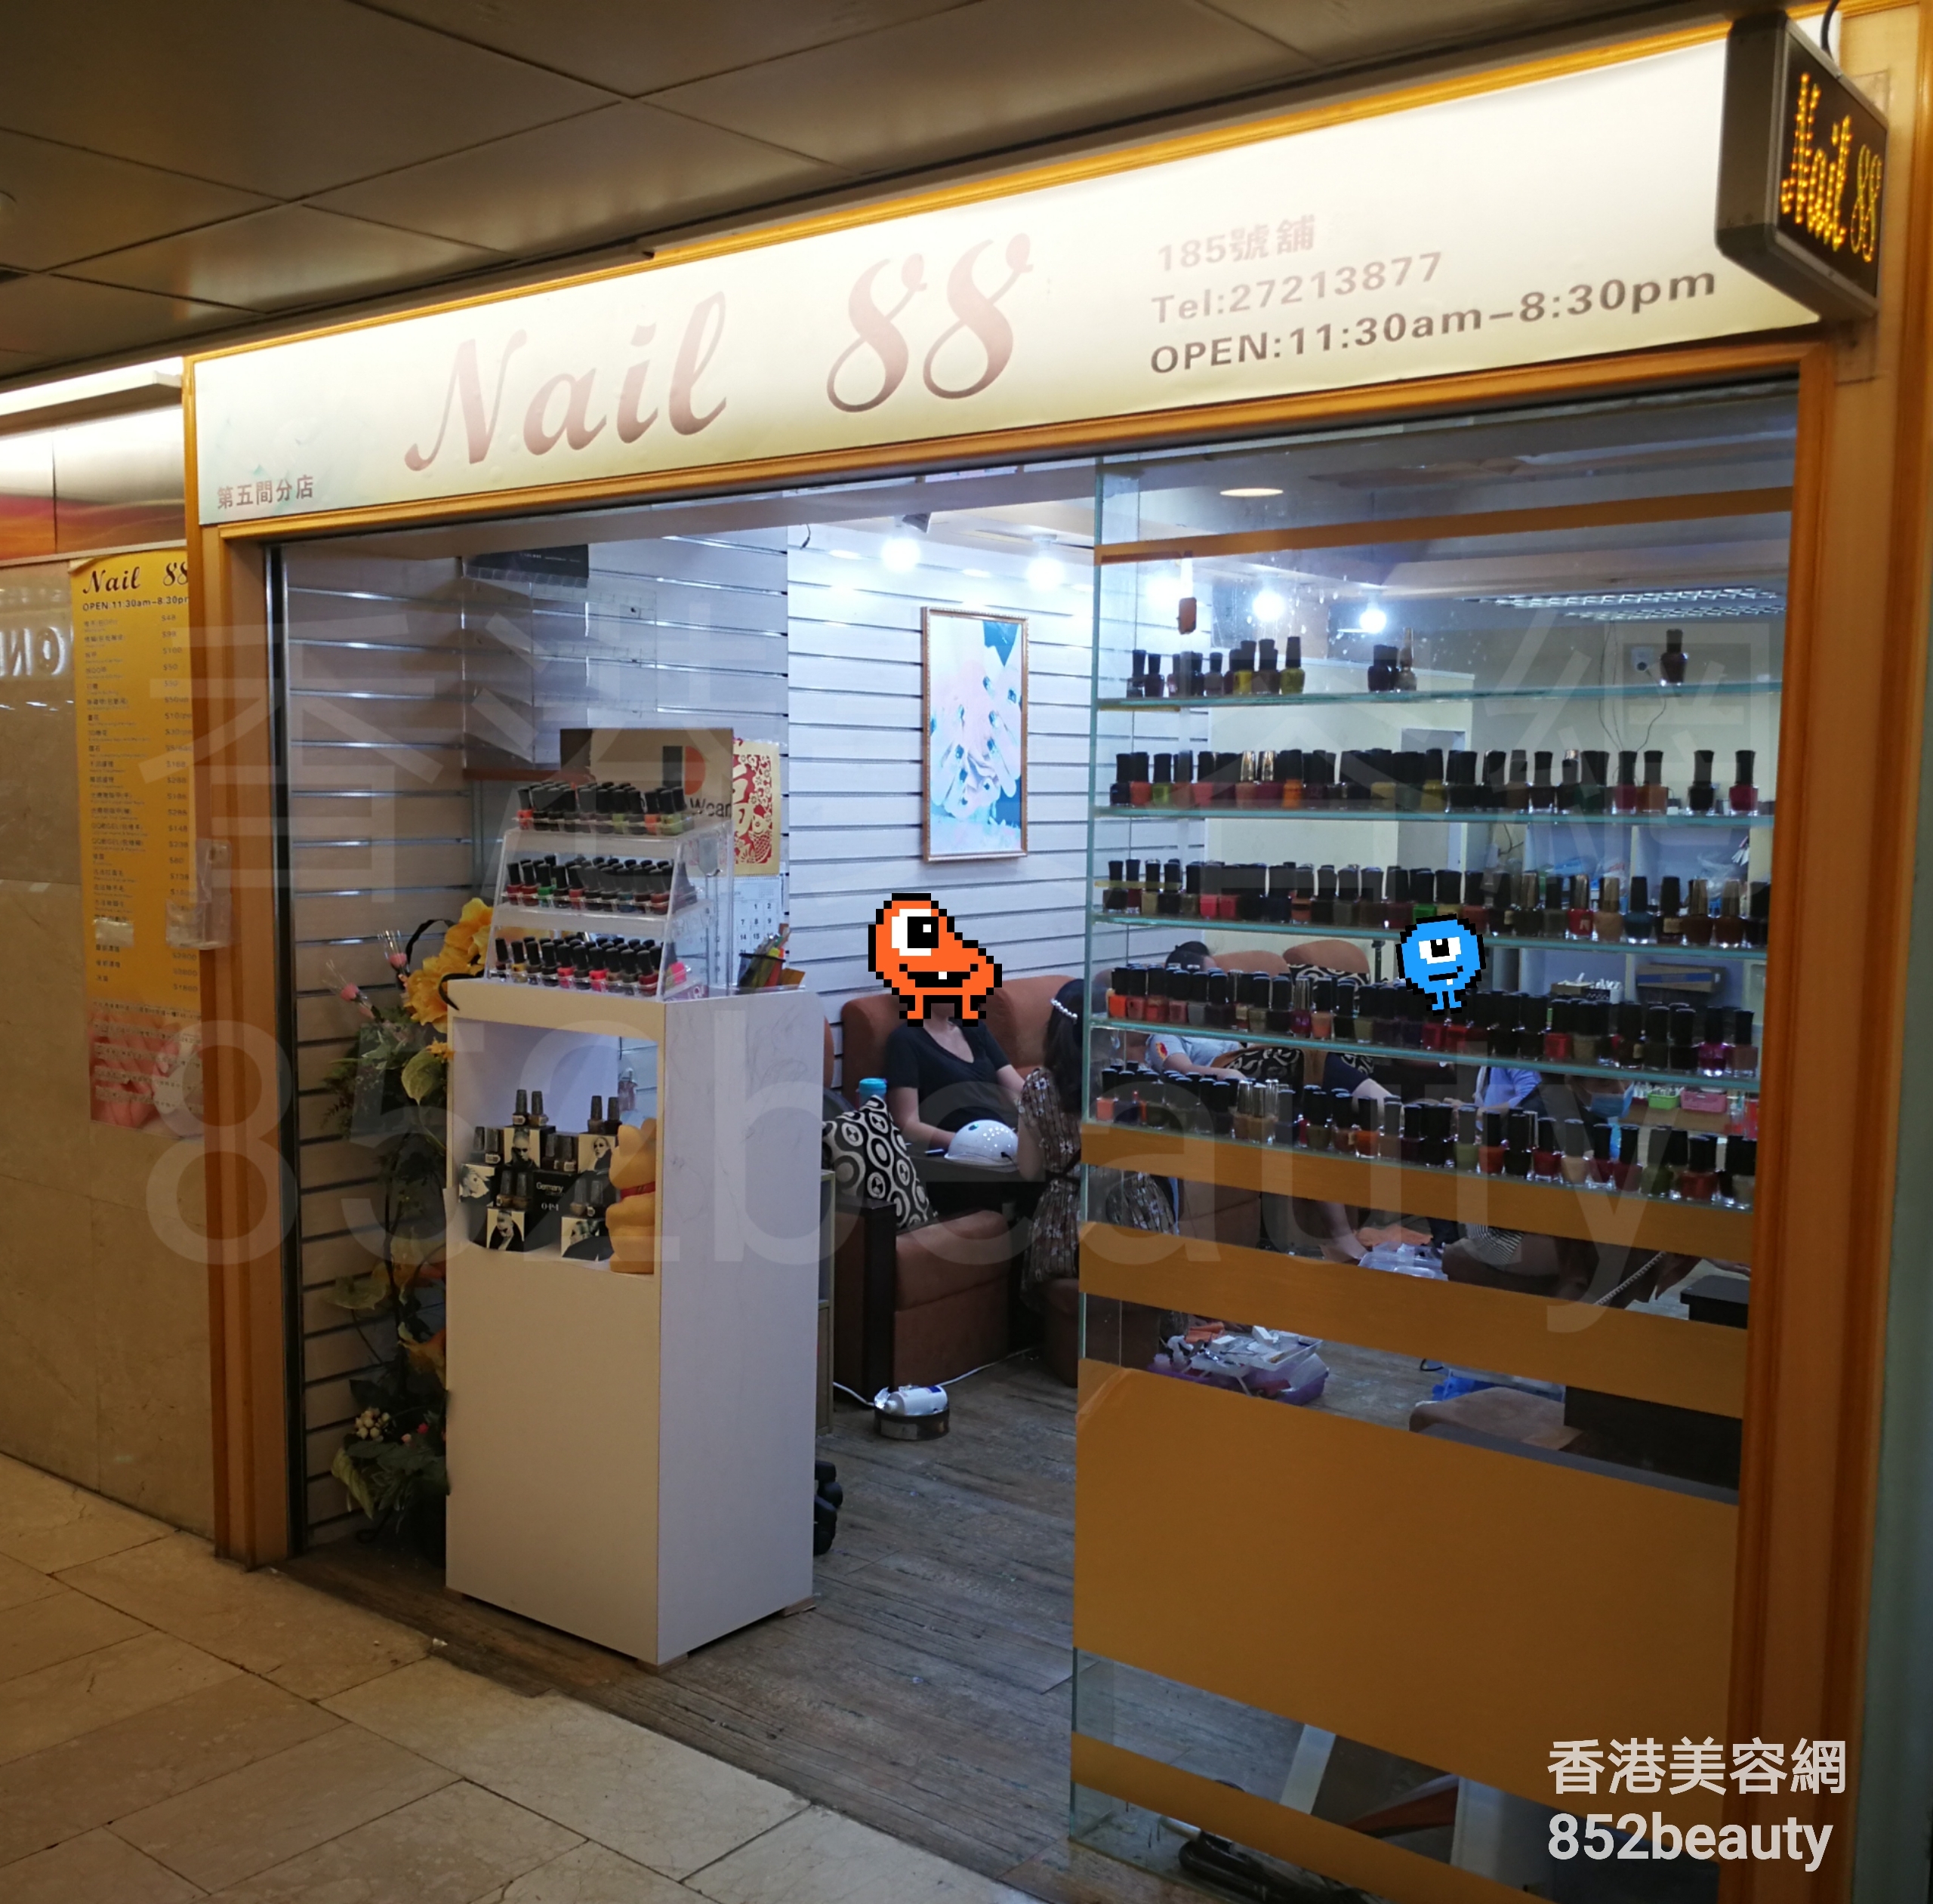 Beauty Salon: Nail 88 (尖沙咀店)